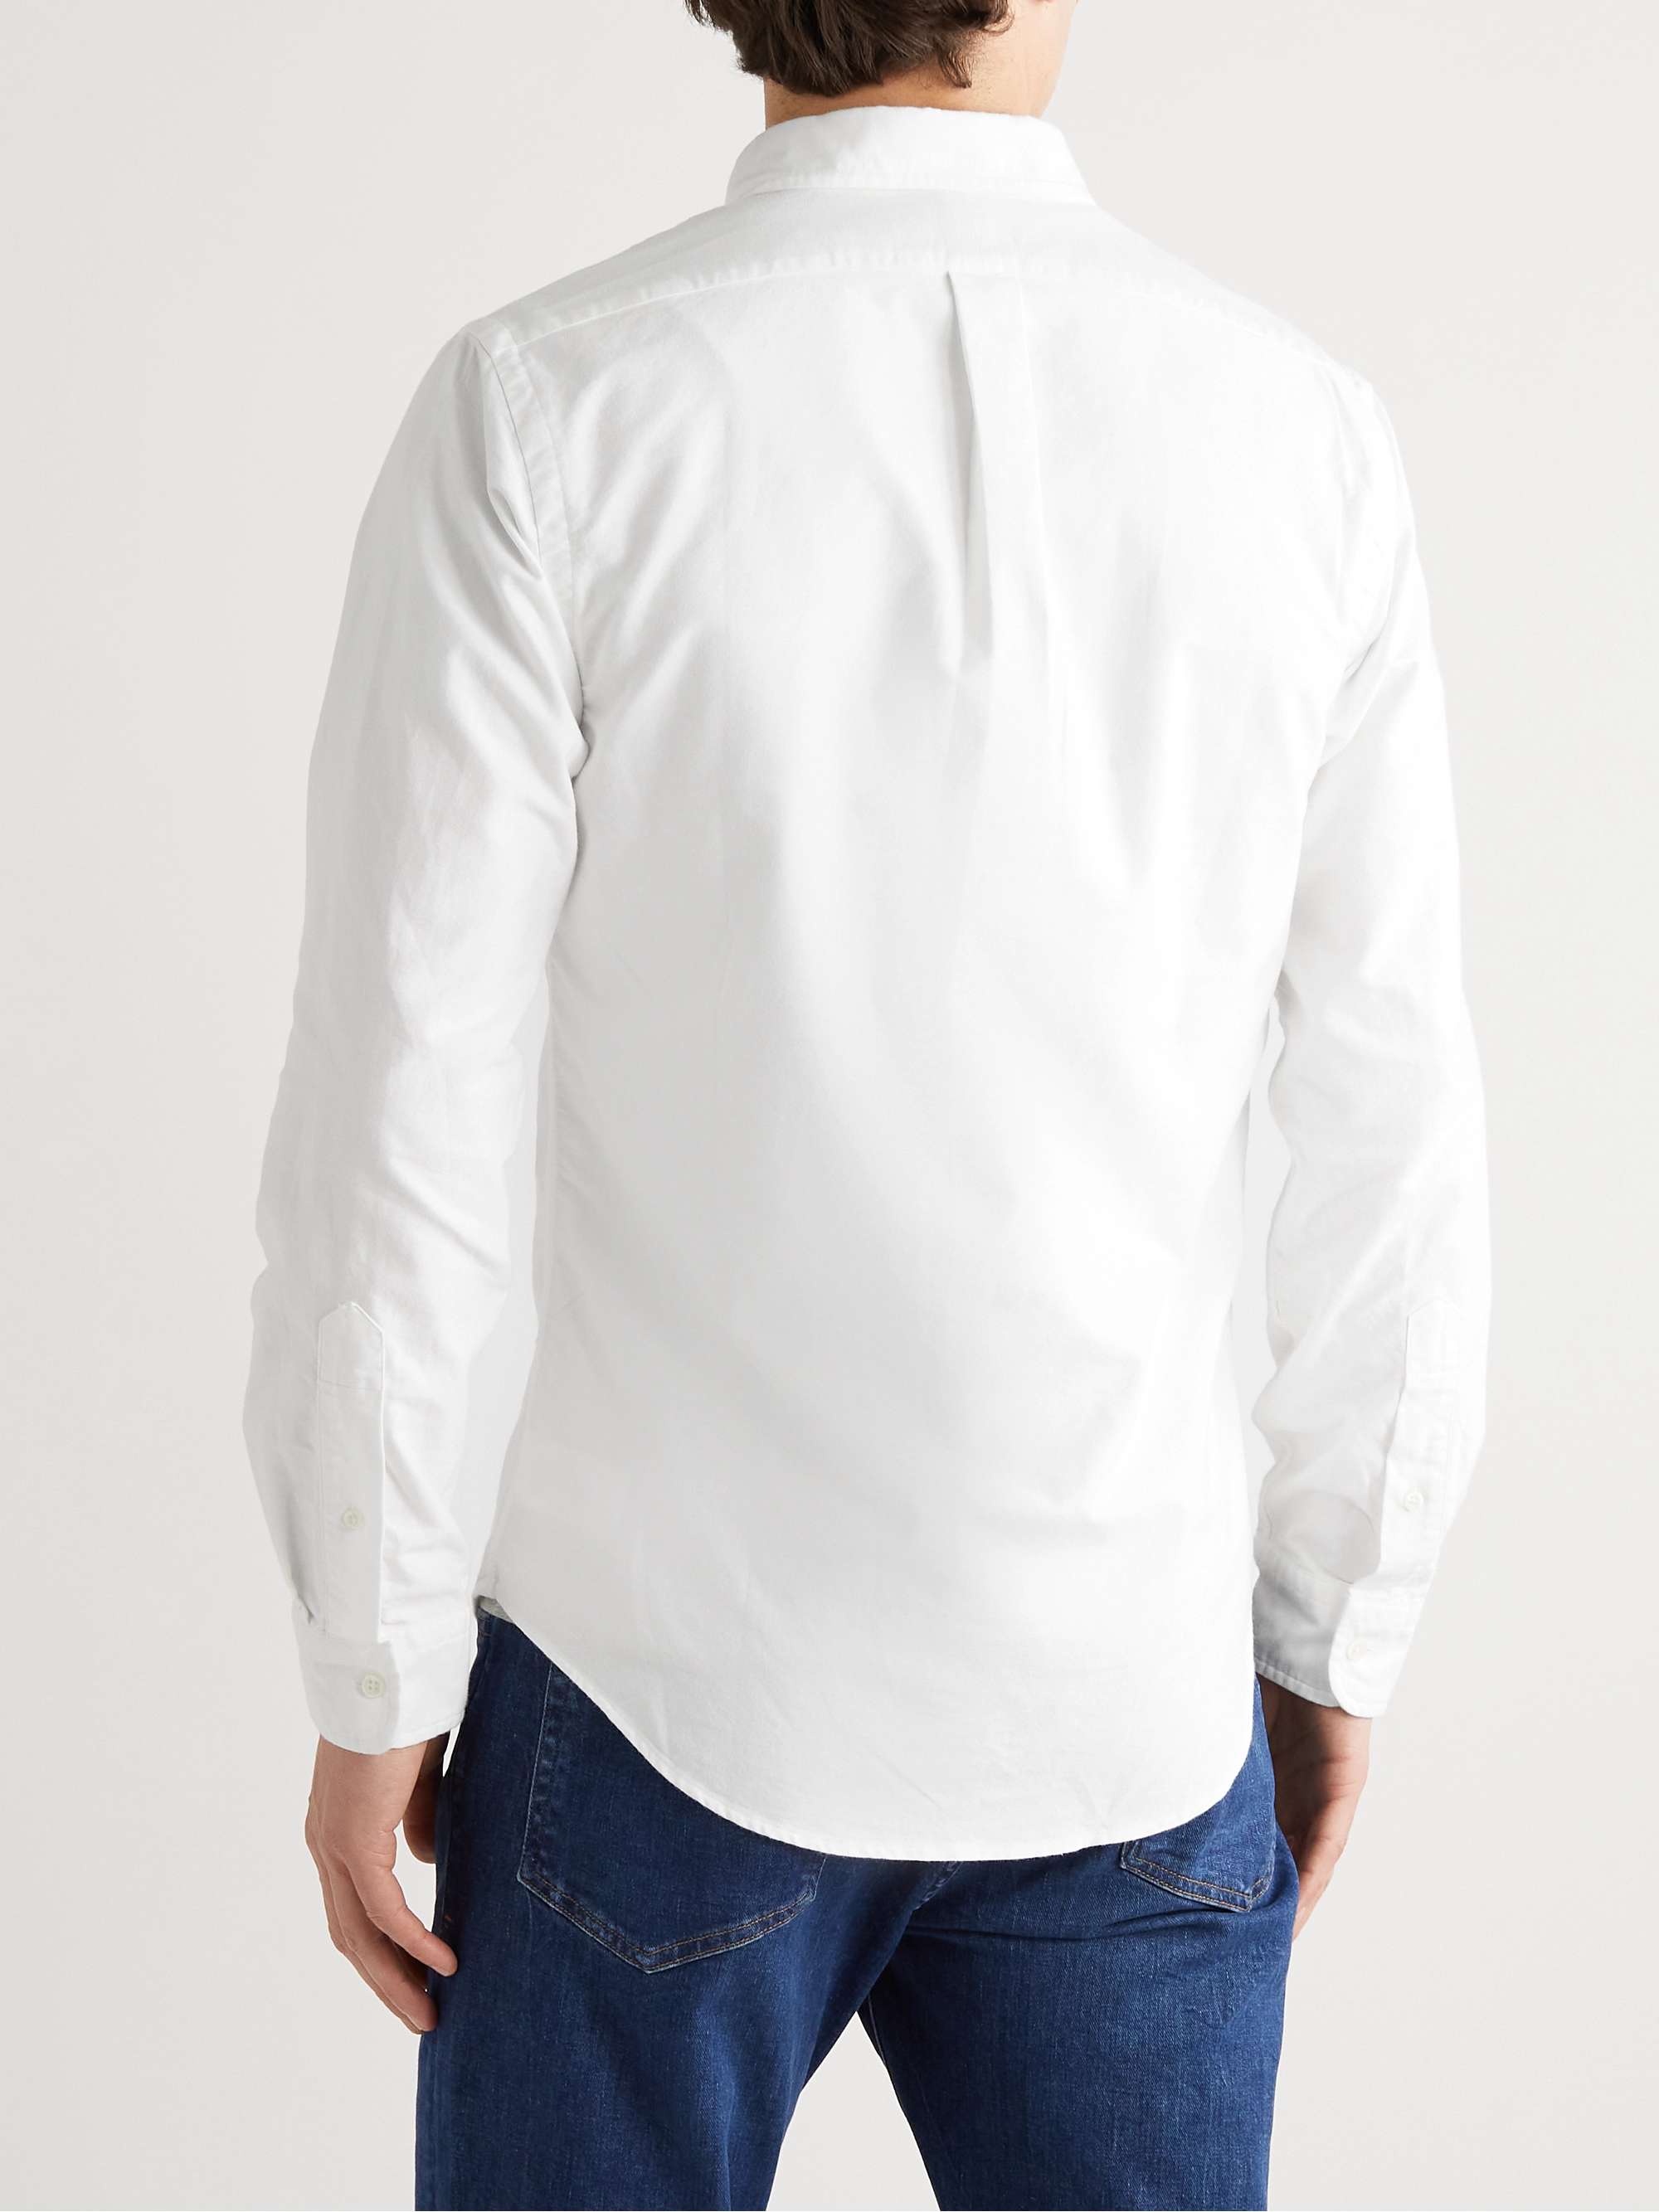 POLO RALPH LAUREN Slim-Fit Cotton Oxford Shirt